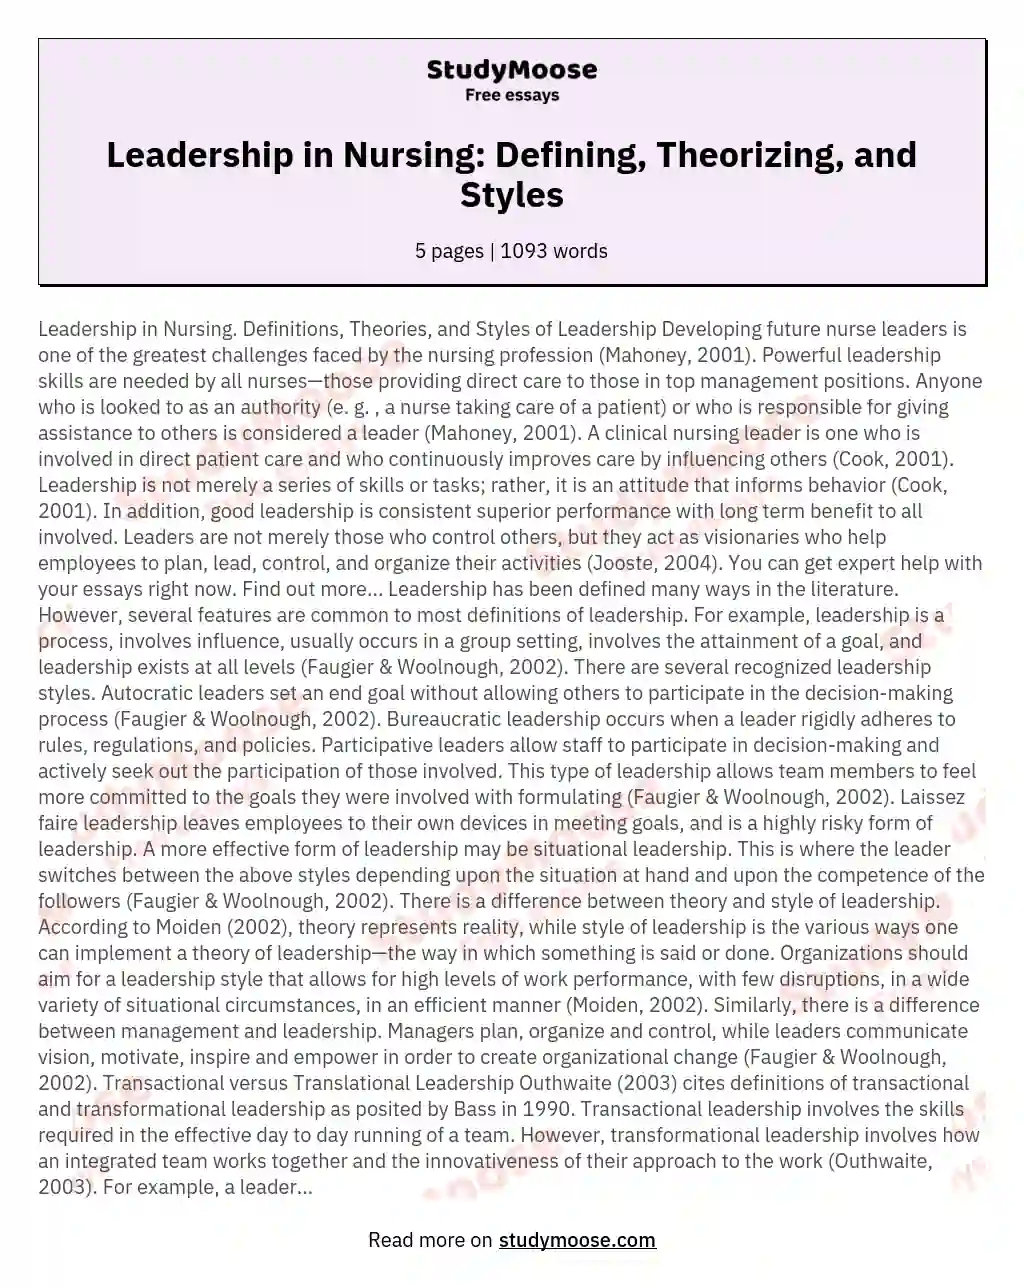 Leadership in Nursing: Defining, Theorizing, and Styles essay